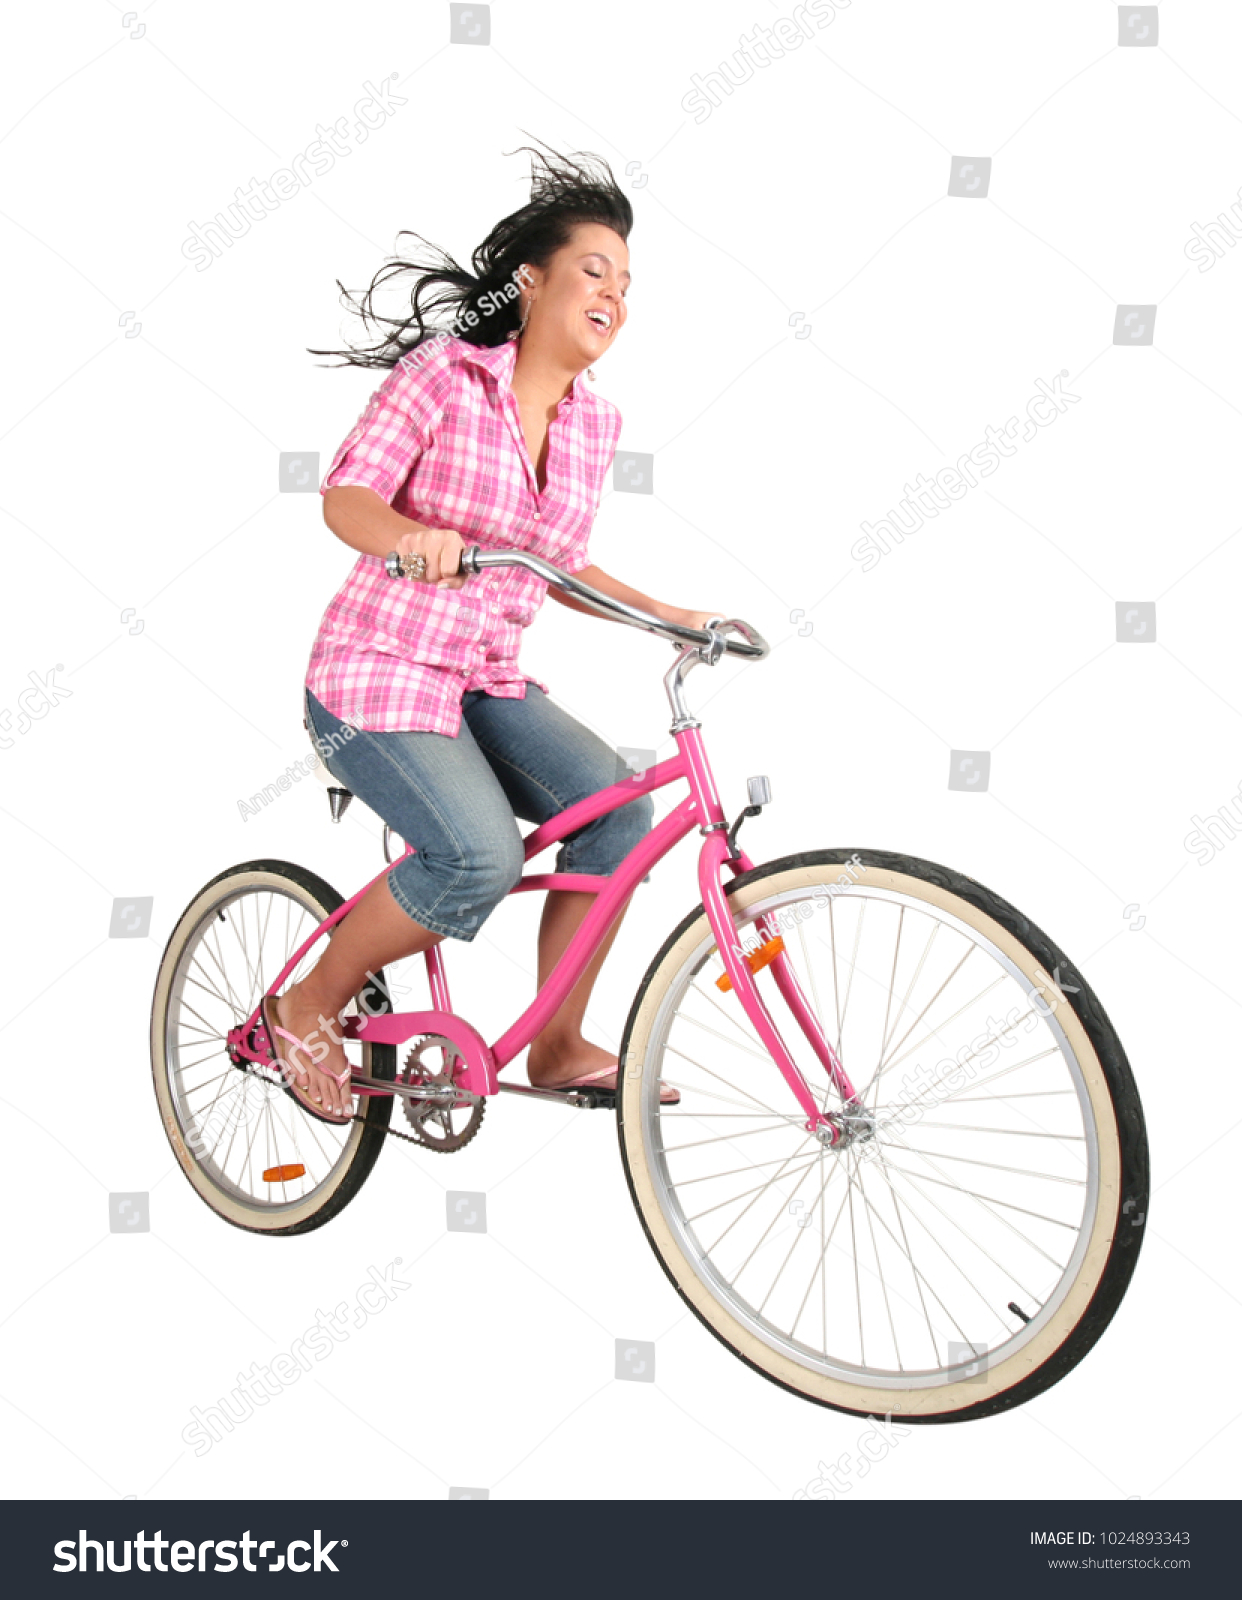 riding a cruiser bike